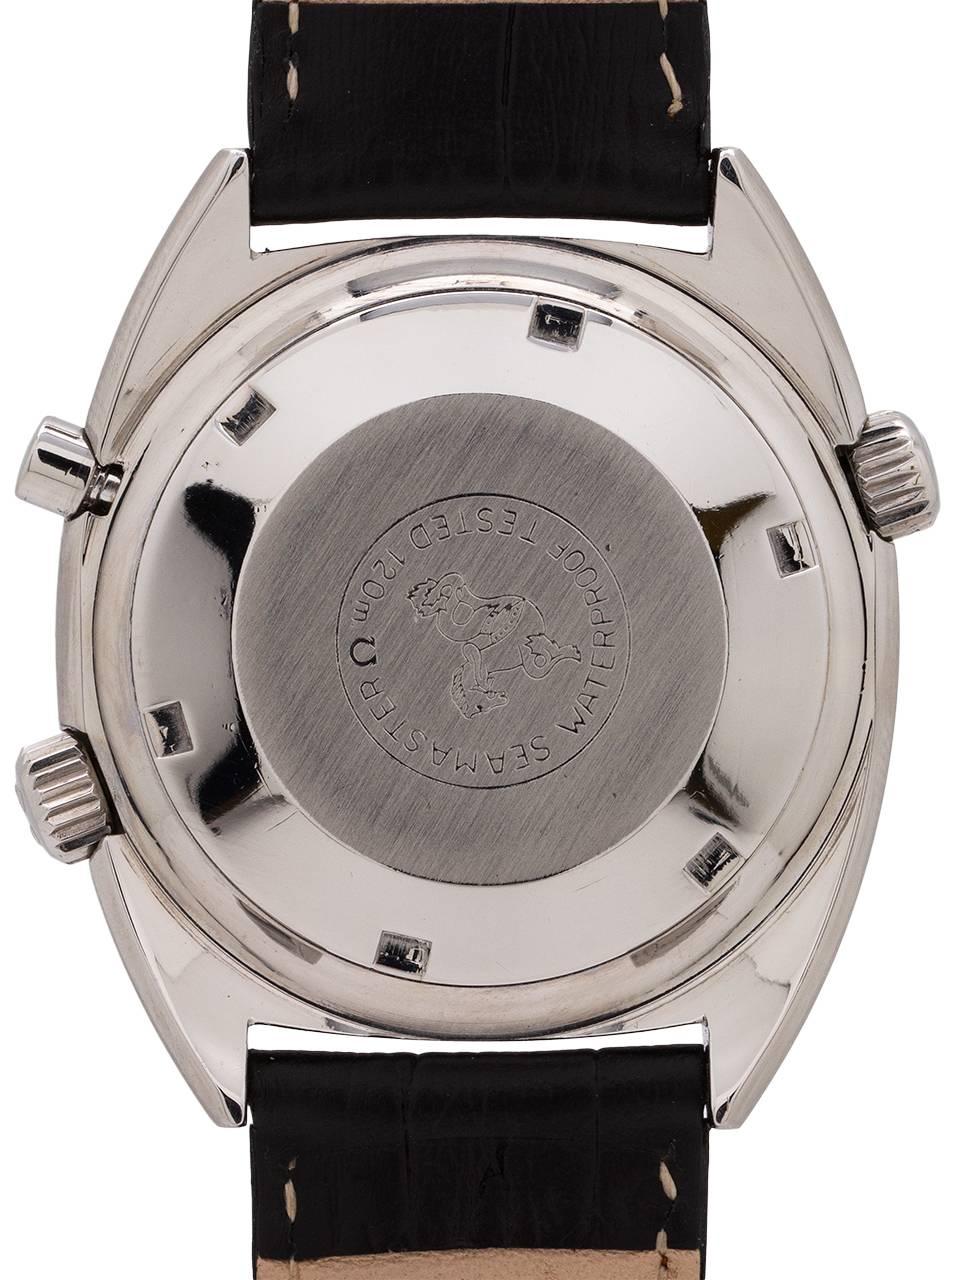 Men's Omega stainless steel Chronostop Seamaster wristwatch, circa 1970s